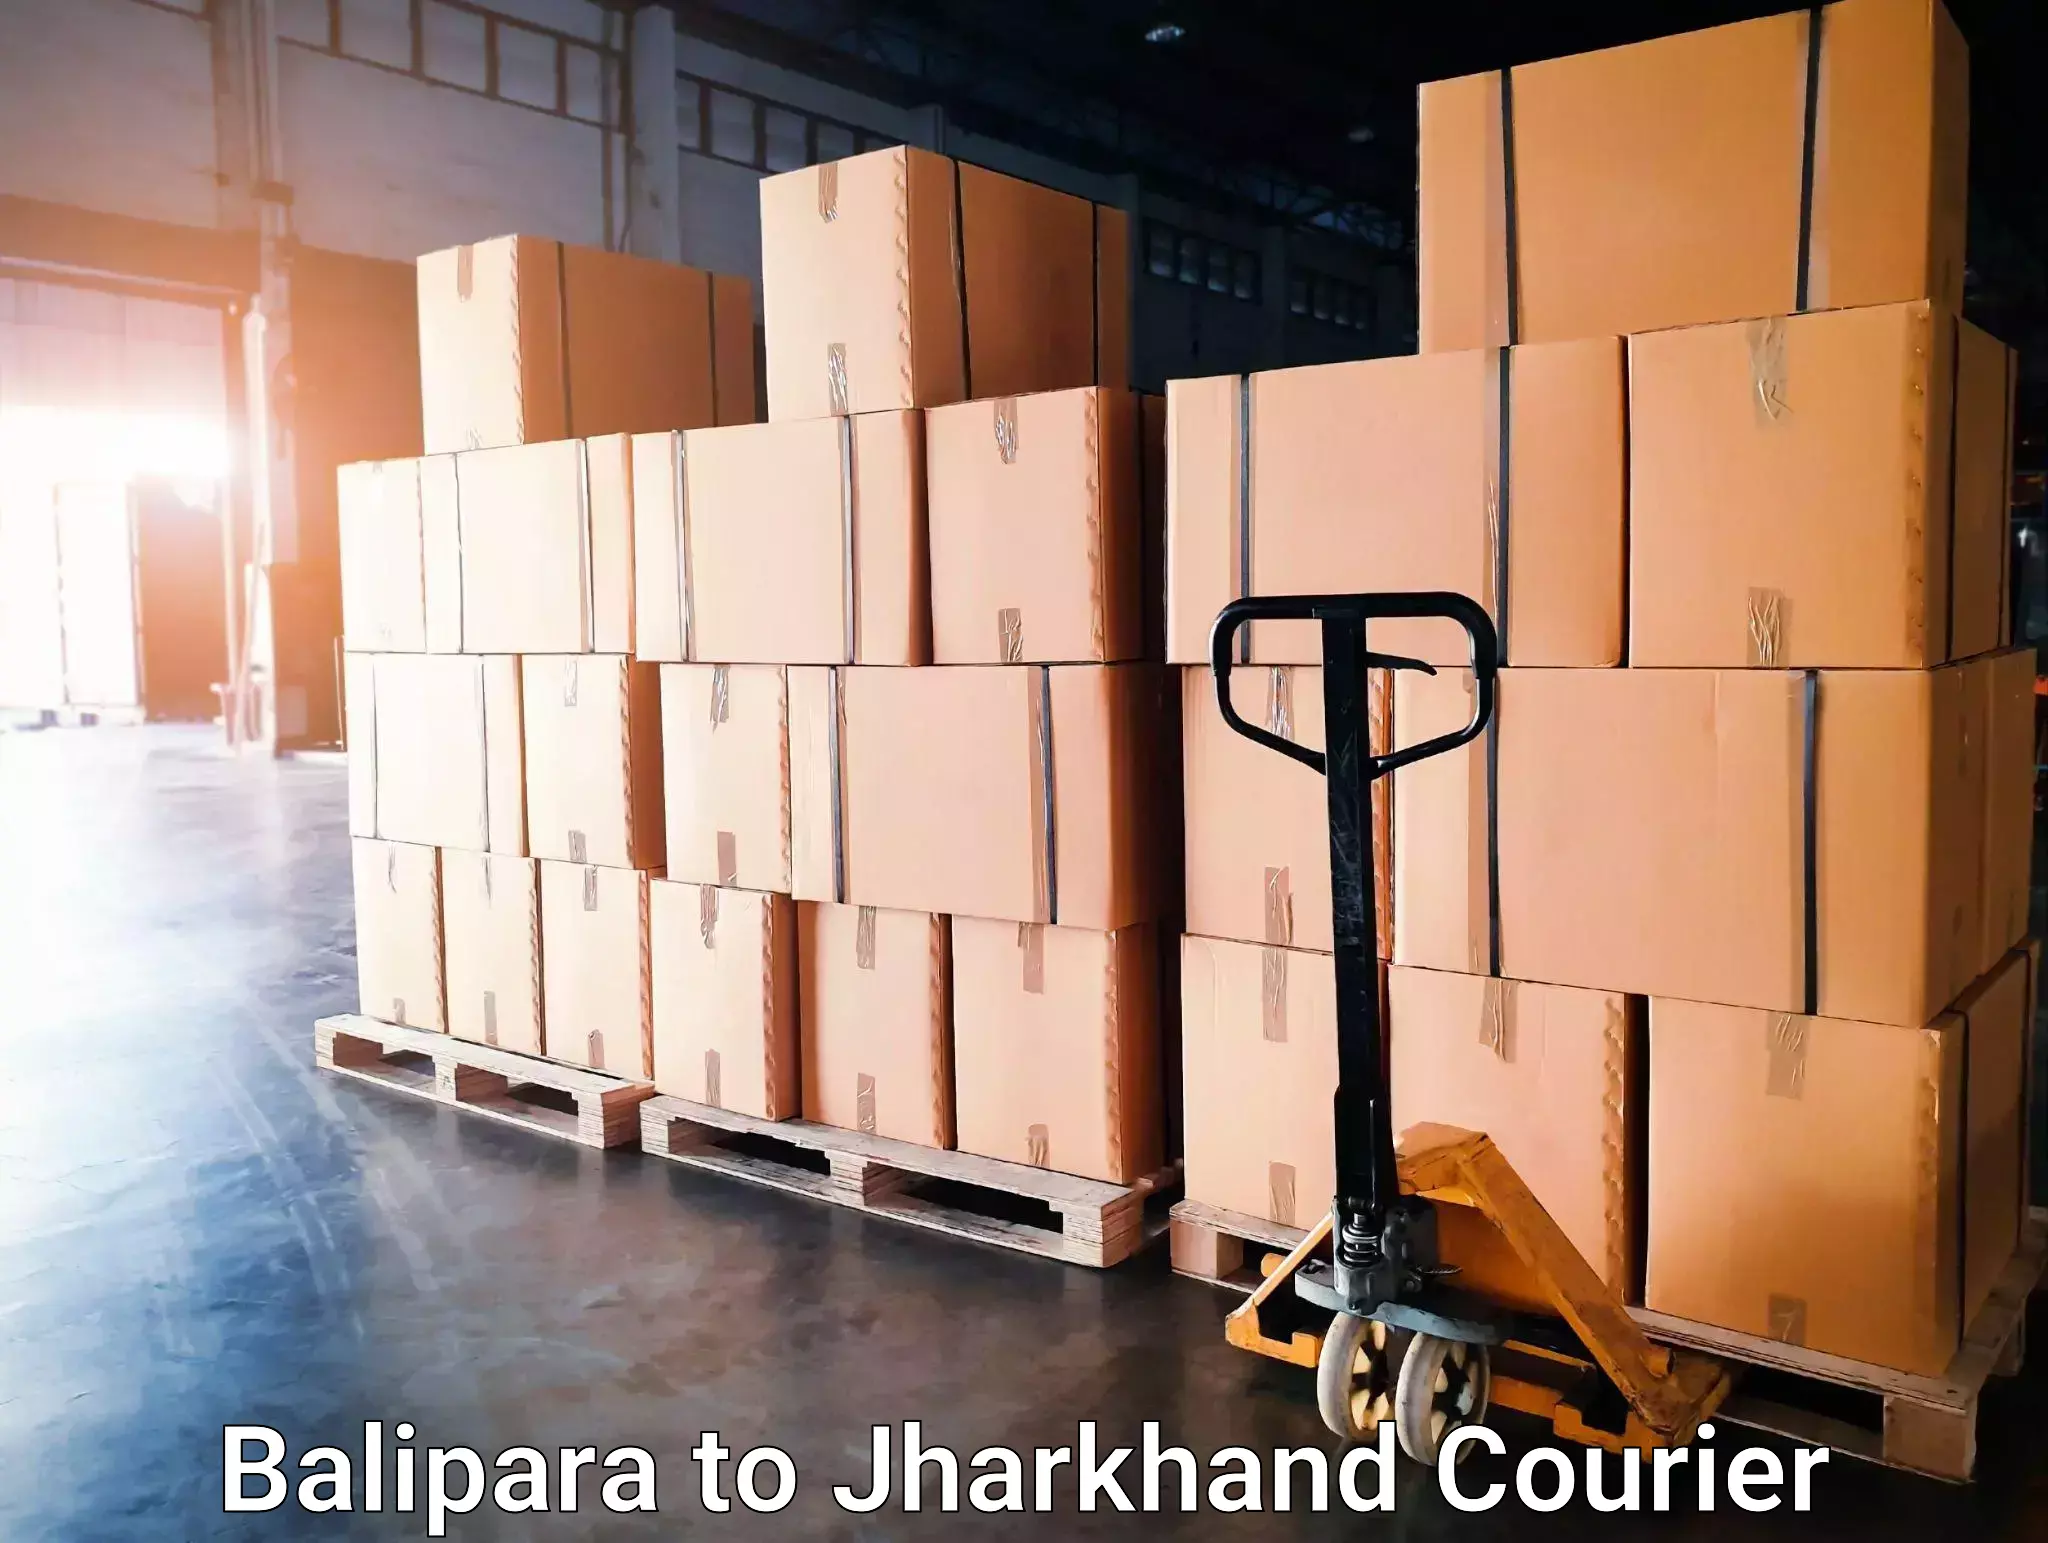 Courier service booking Balipara to Daltonganj